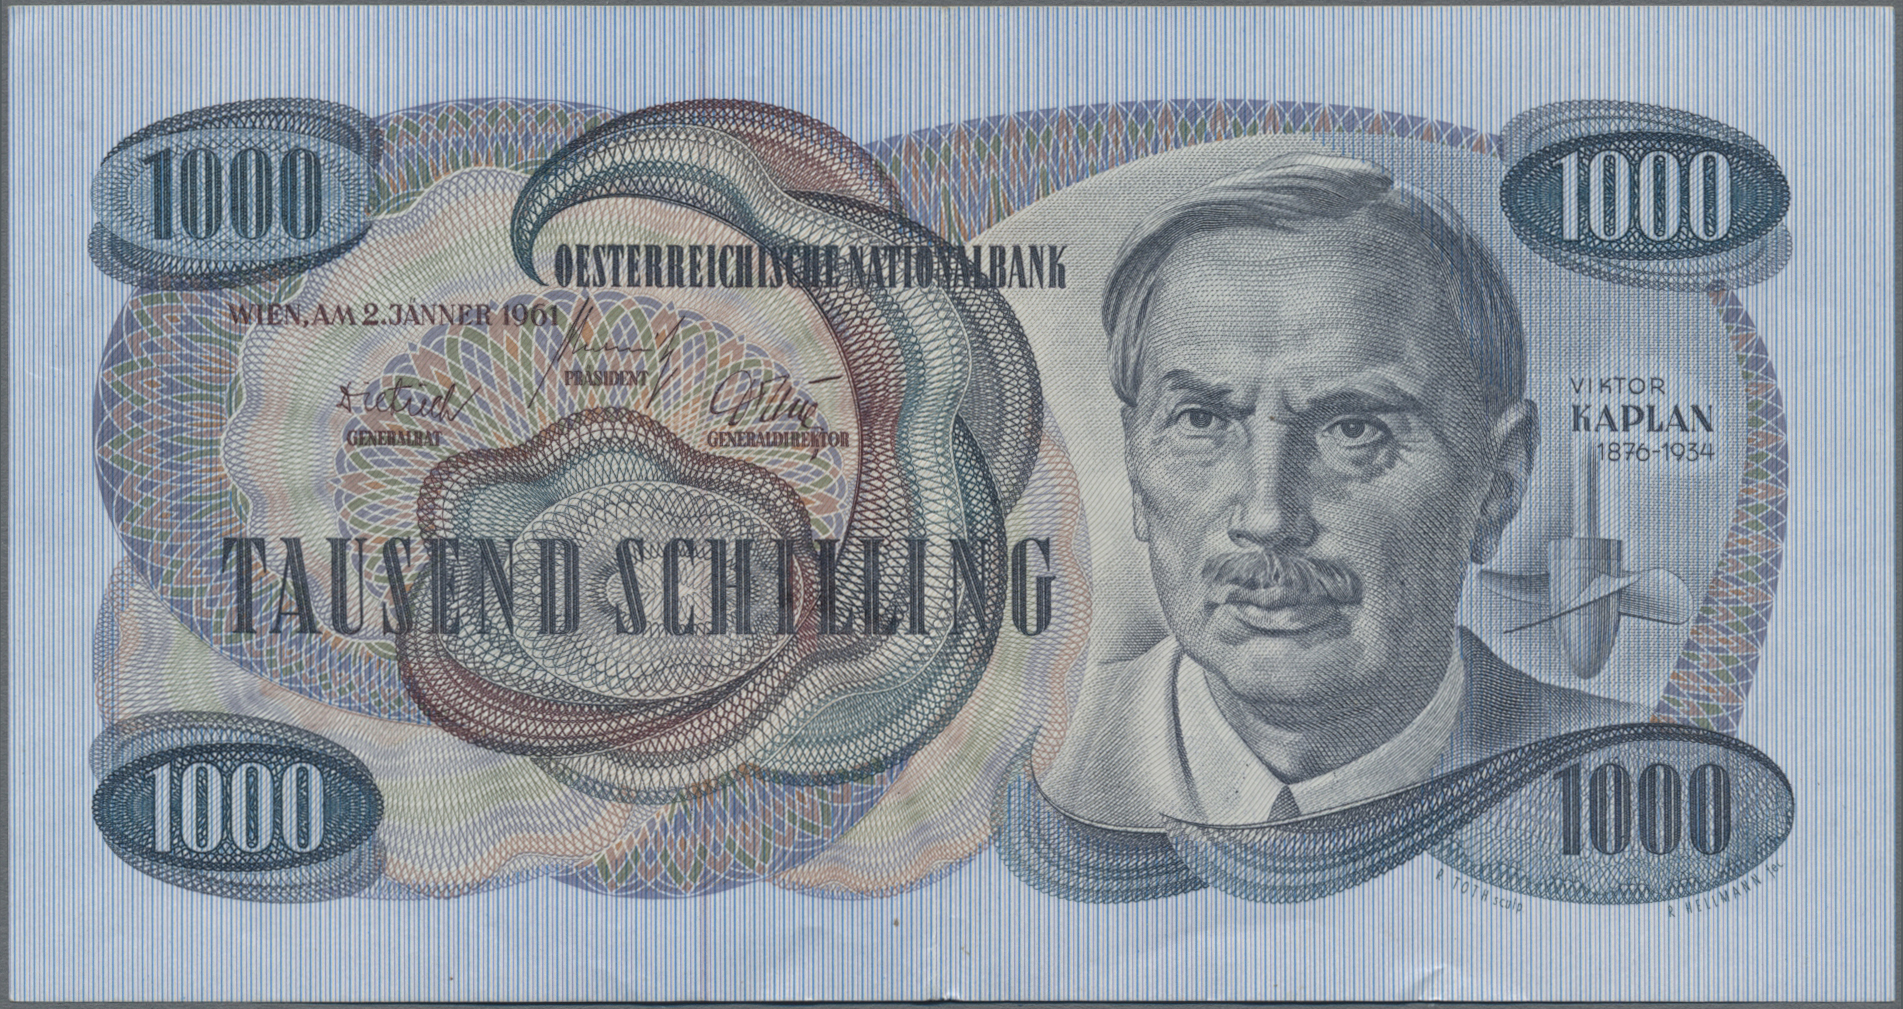 Lot 14017 - Austria / Österreich | Banknoten  -  Auktionshaus Christoph Gärtner GmbH & Co. KG 53rd AUCTION - Day 6 Coins/Banknotes